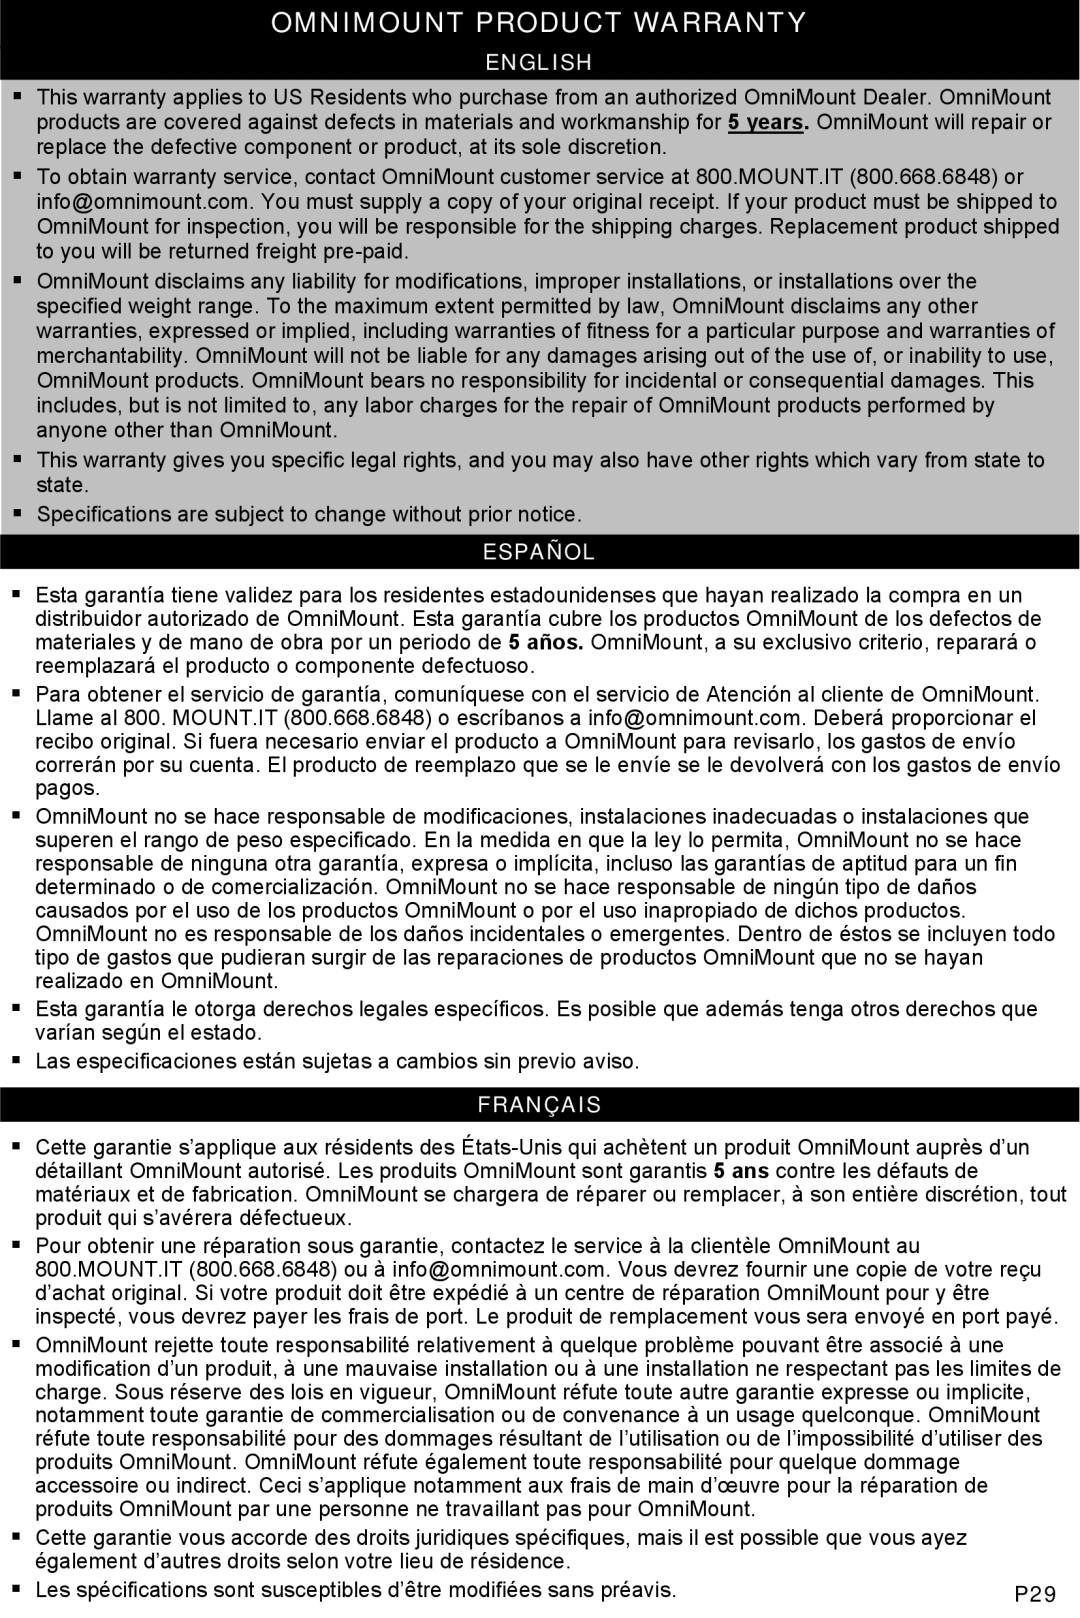 Omnimount Tria 2 instruction manual Omnimount Product Warranty, English, Español, Français 